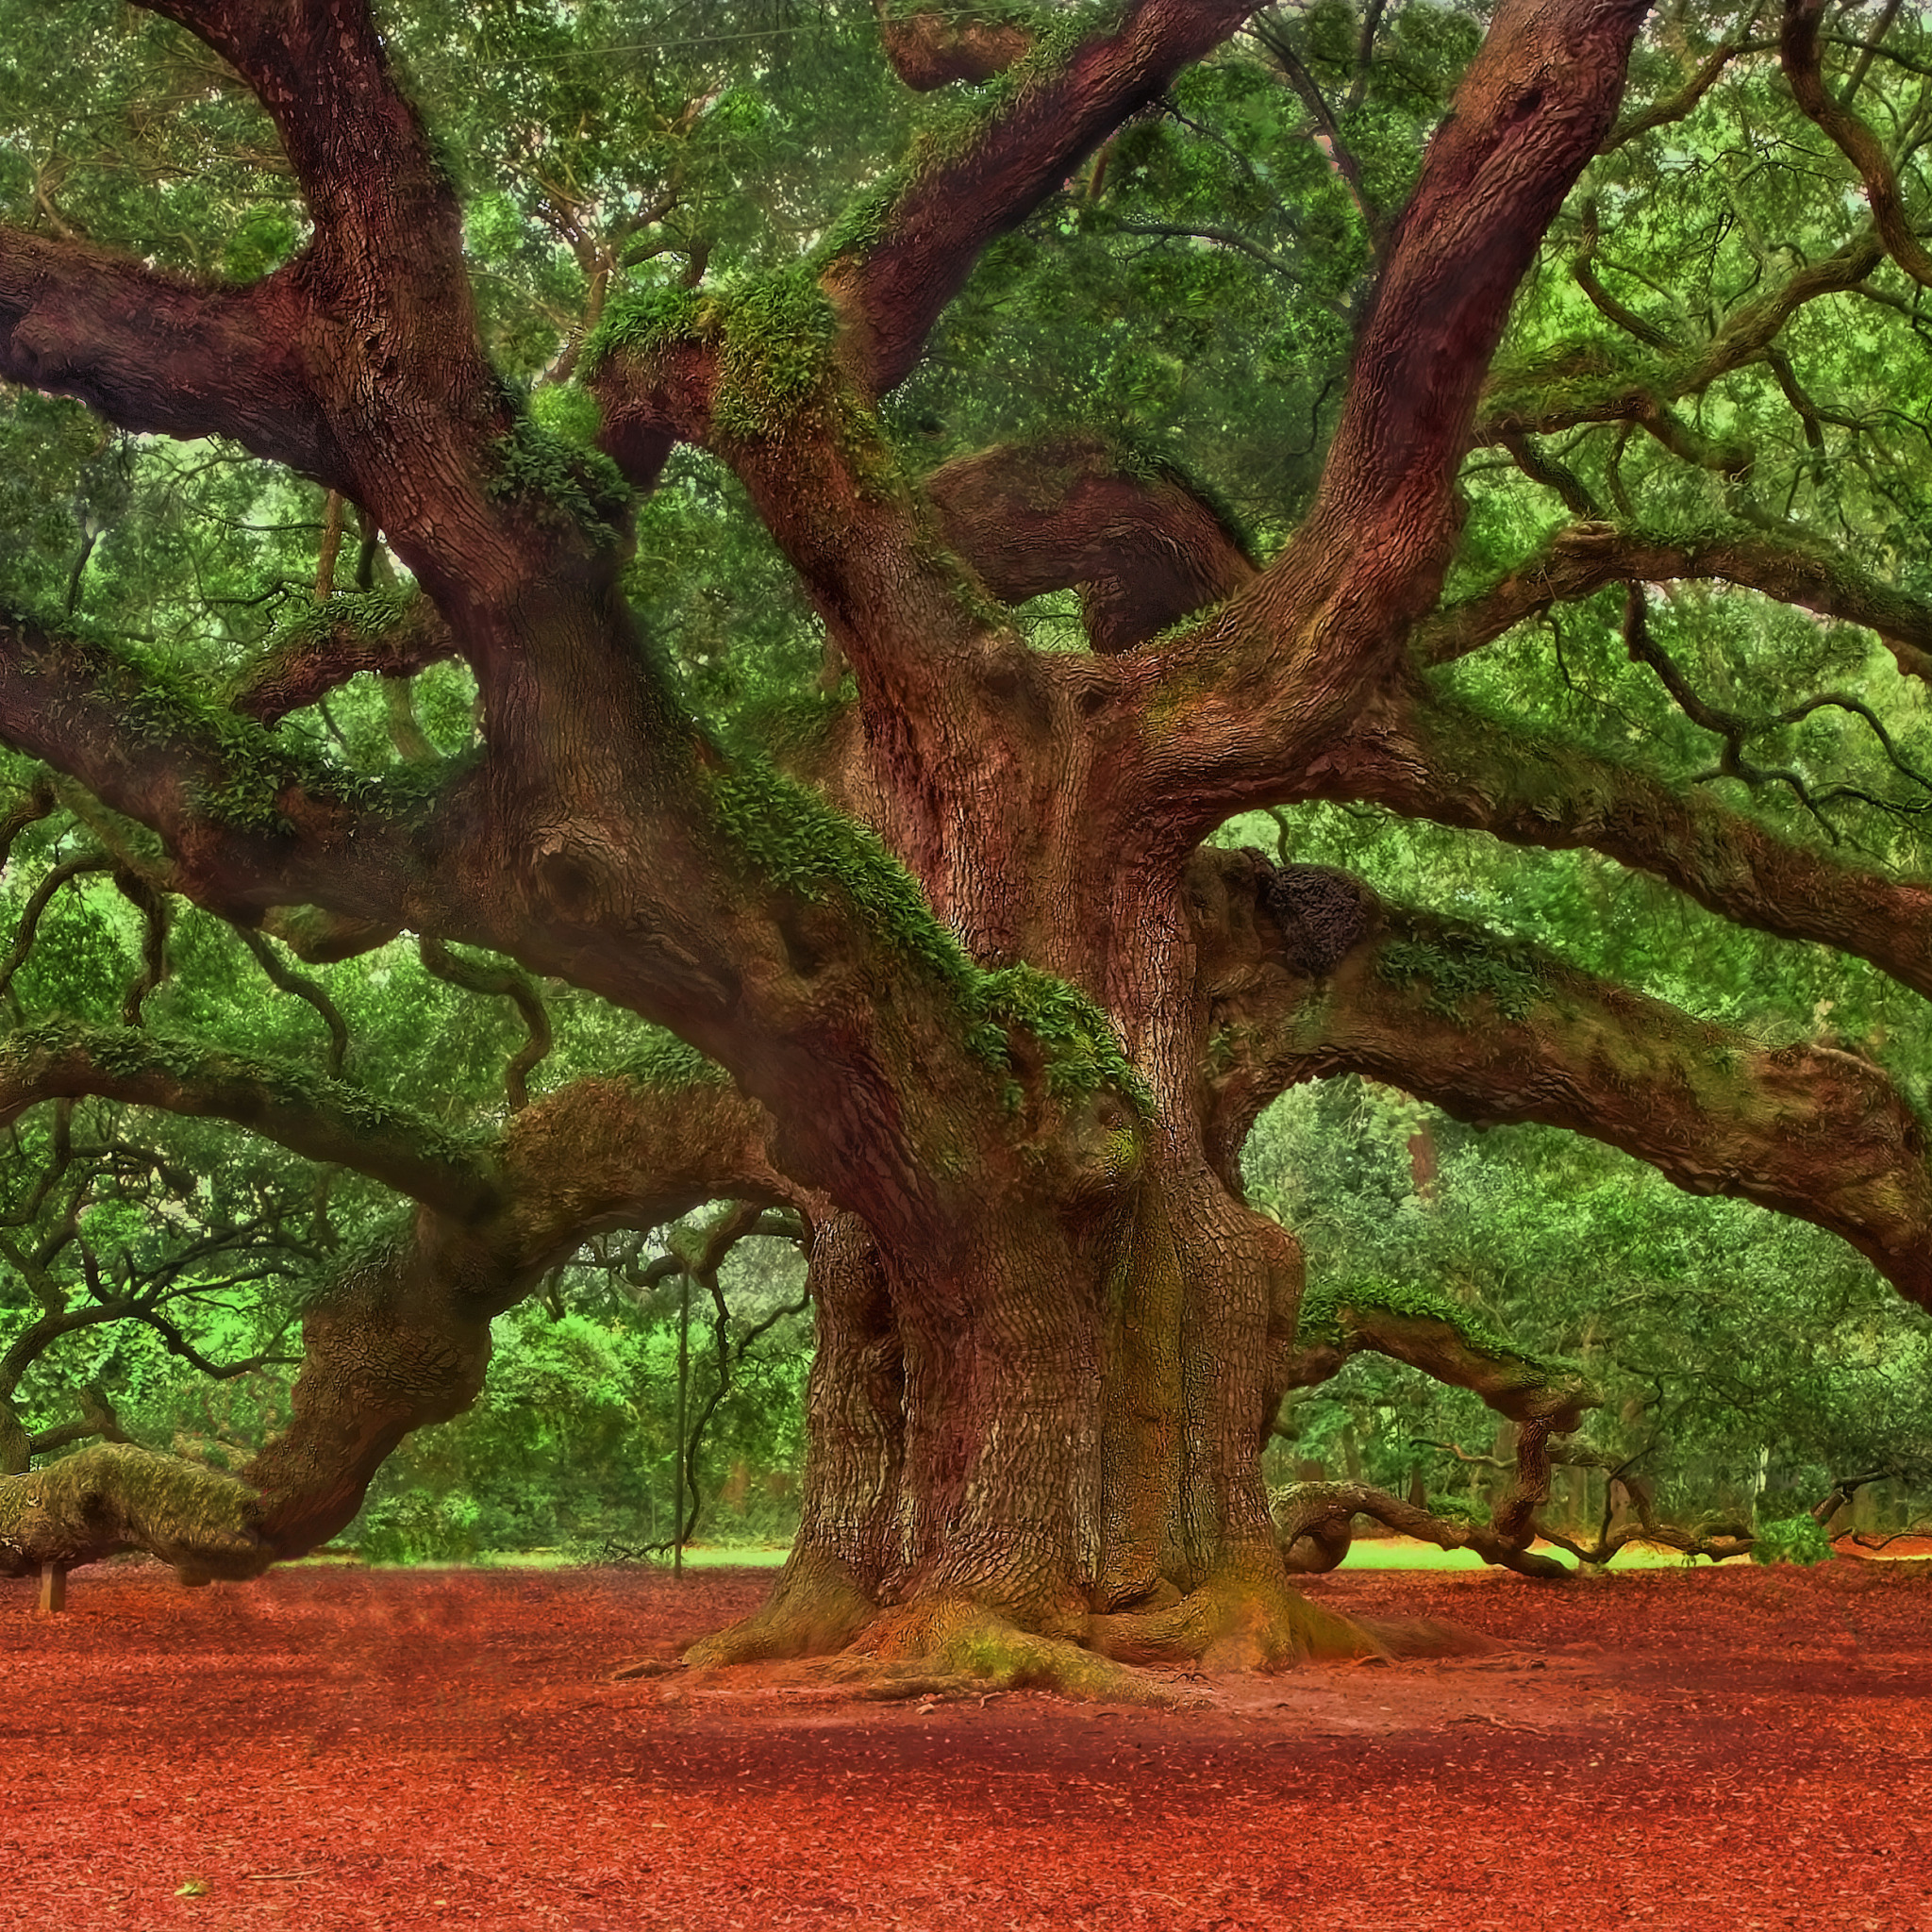 Покажи красивое дерево. Дуб парк Фредвилл, Нонингтон, Великобритания. Раскидистое дерево дуб. Ветвистое дерево. Мощное дерево.